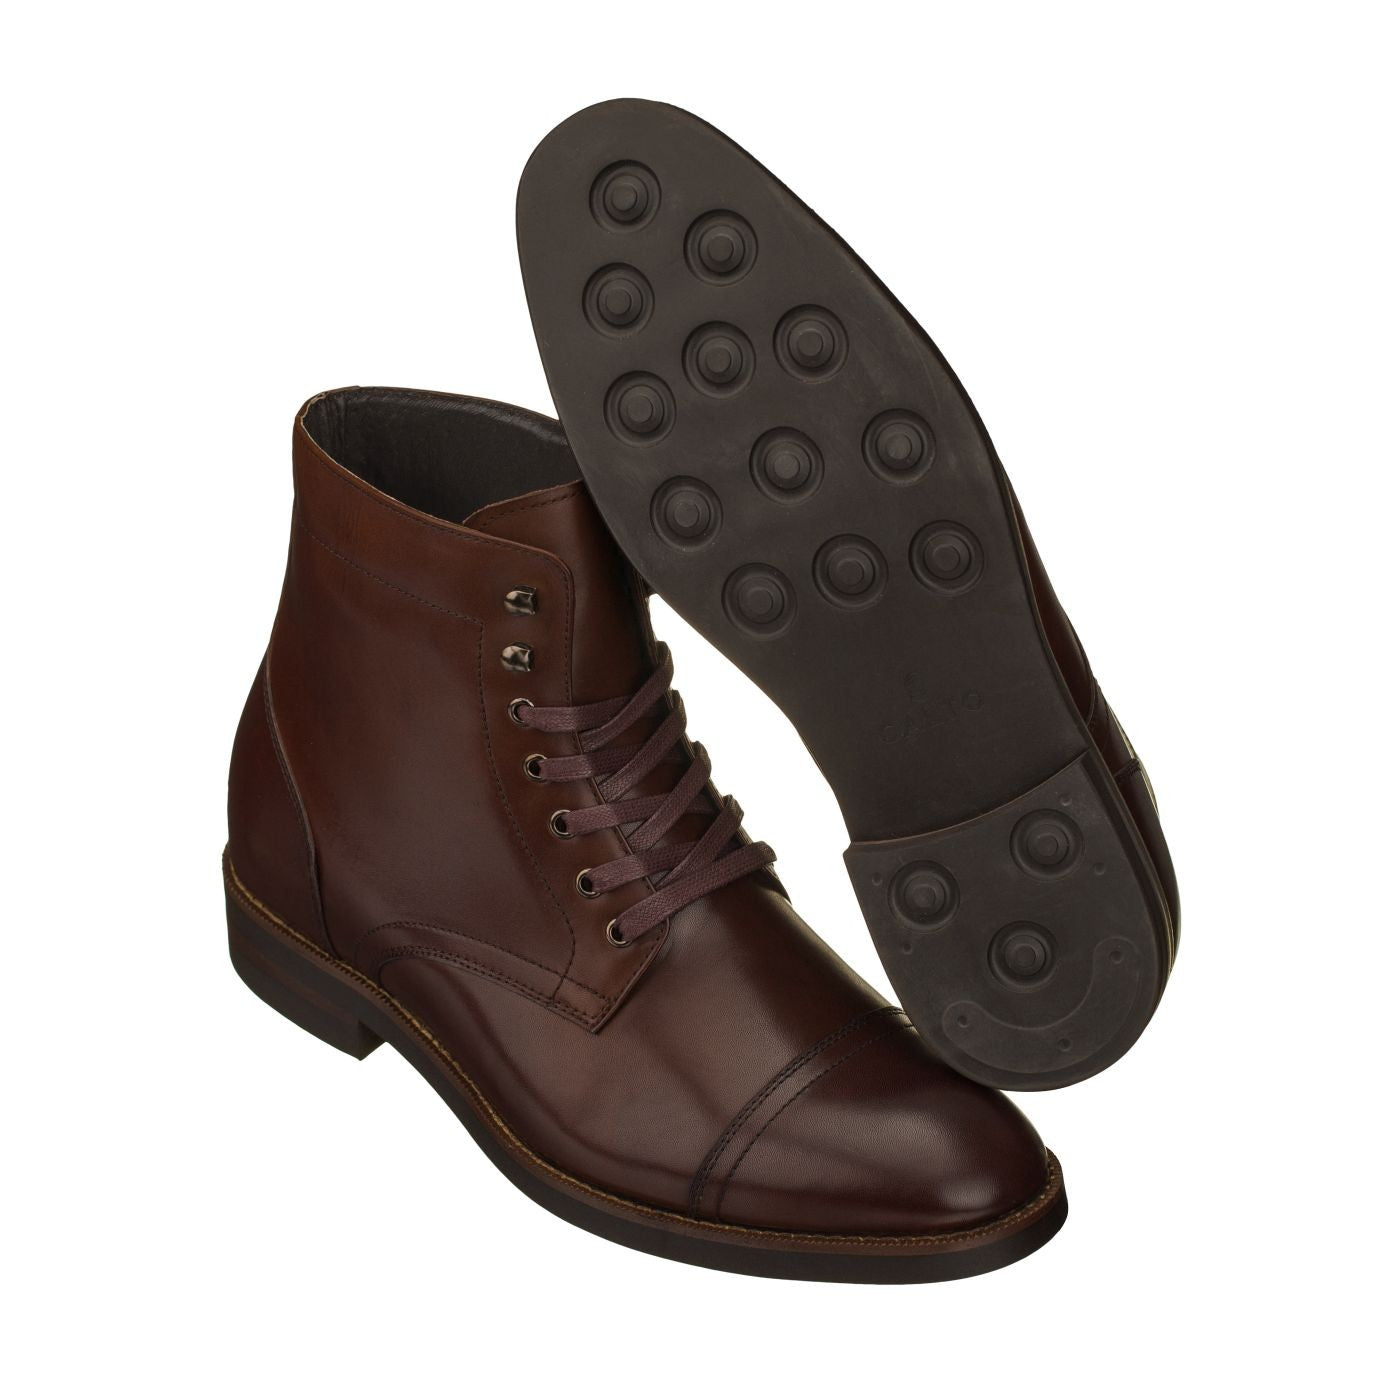 Elevator shoes height increase CALTO 2.8-Inch Taller Men's Cordovan Dark Brown Boots S9011